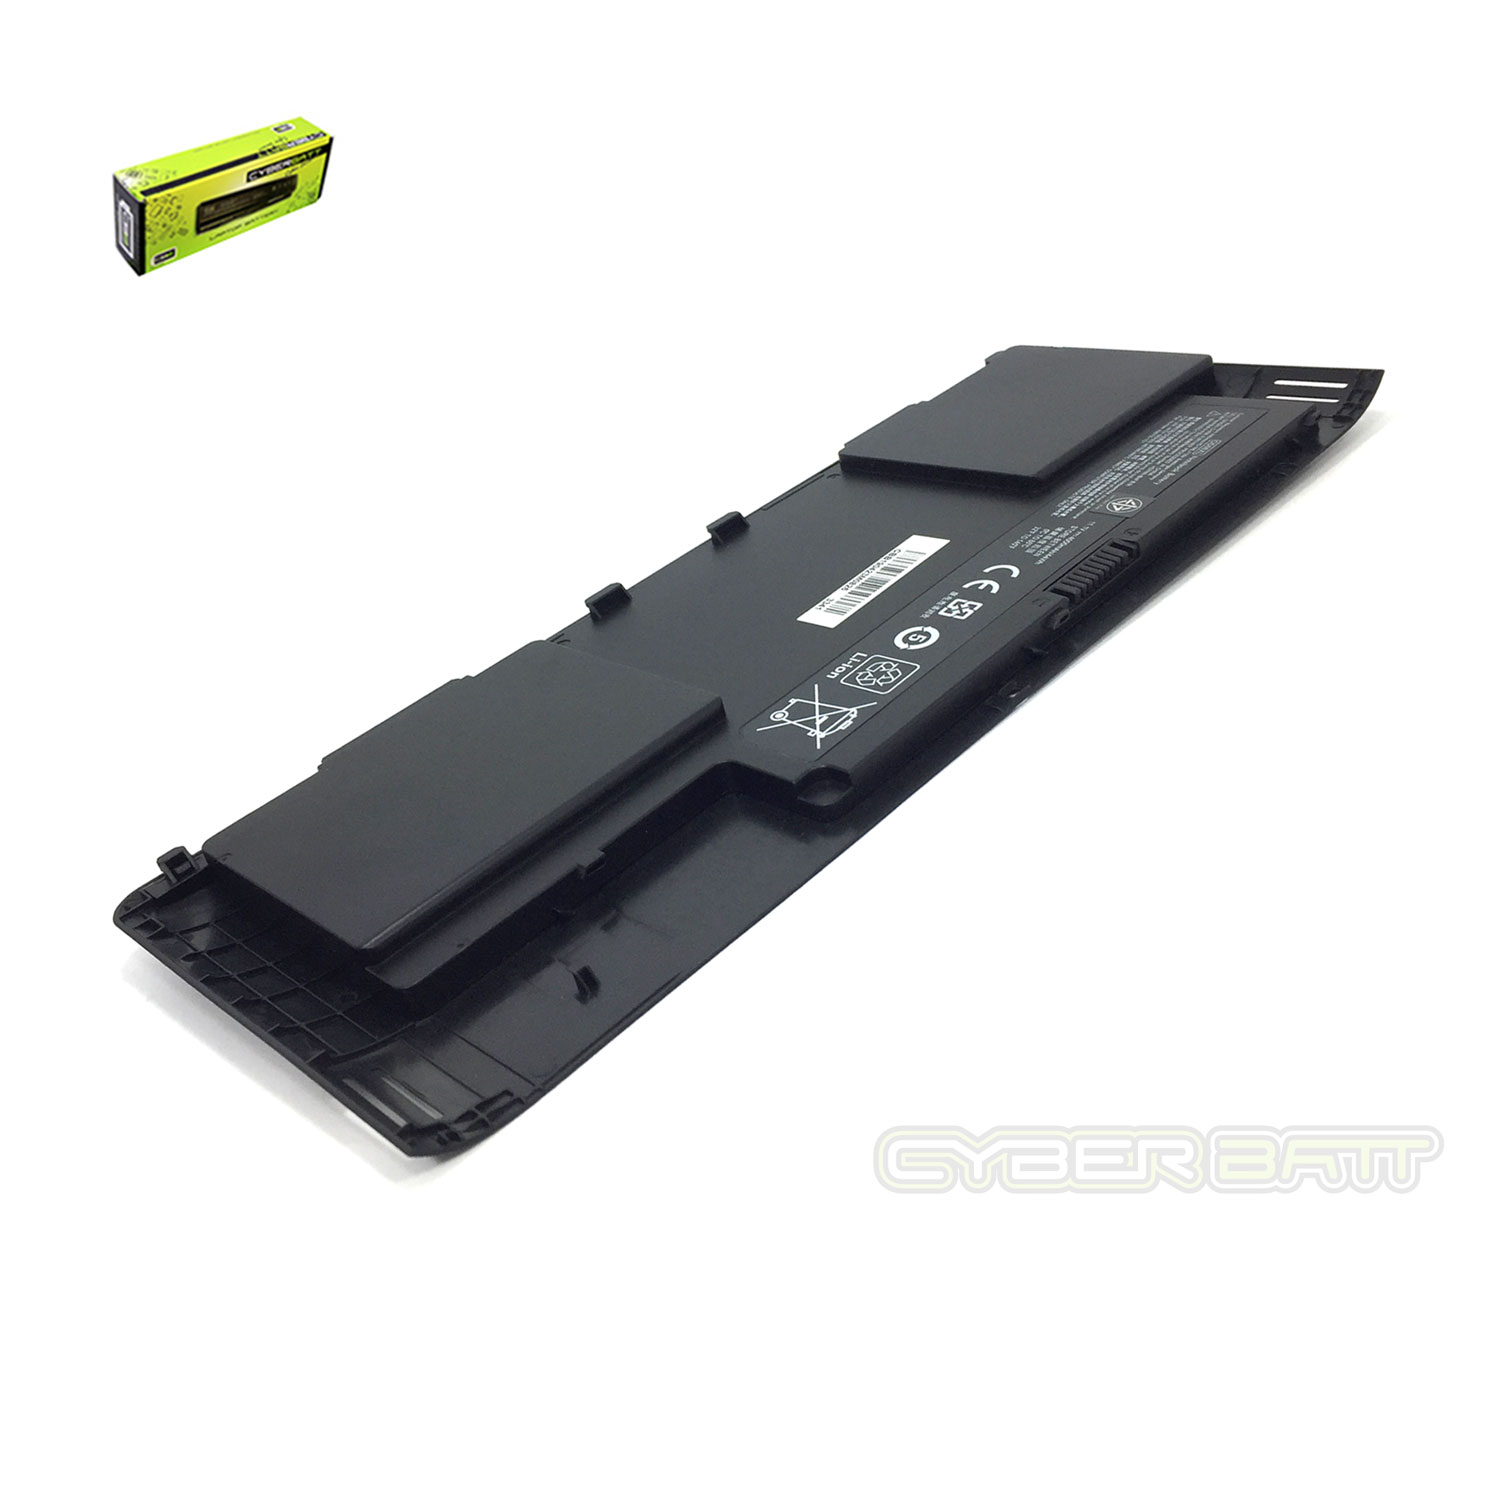 Battery HP EliteBook Revolve 810 G1 OD06-3S1P : 11.1V - 4000mAh Black (CBB)